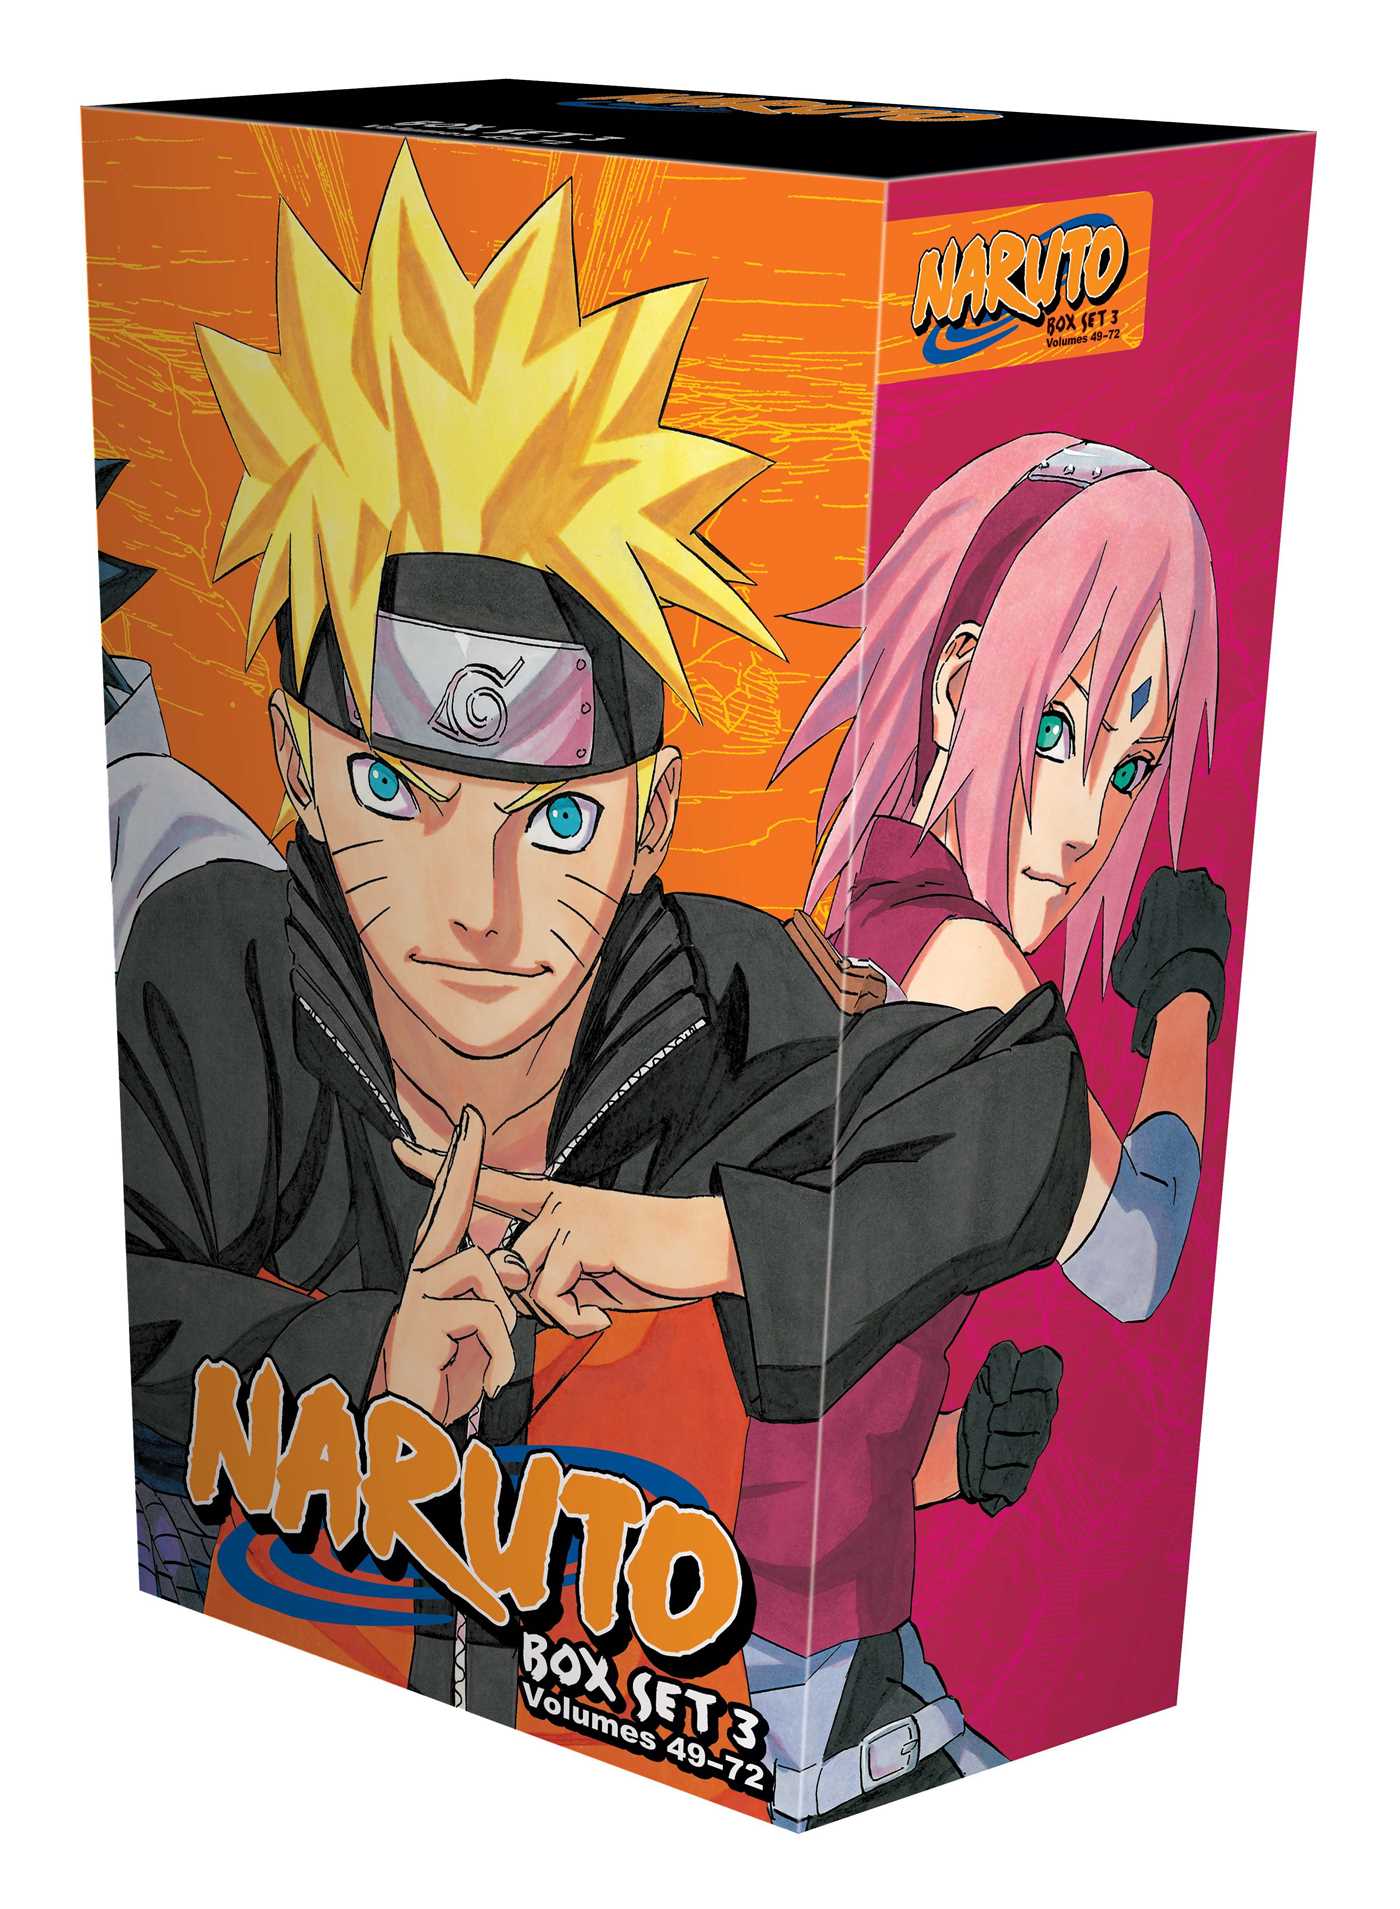 Naruto Box Set 3 Volumes 49-72 with Premium By Masashi Kishimoto - LV'S Global Media